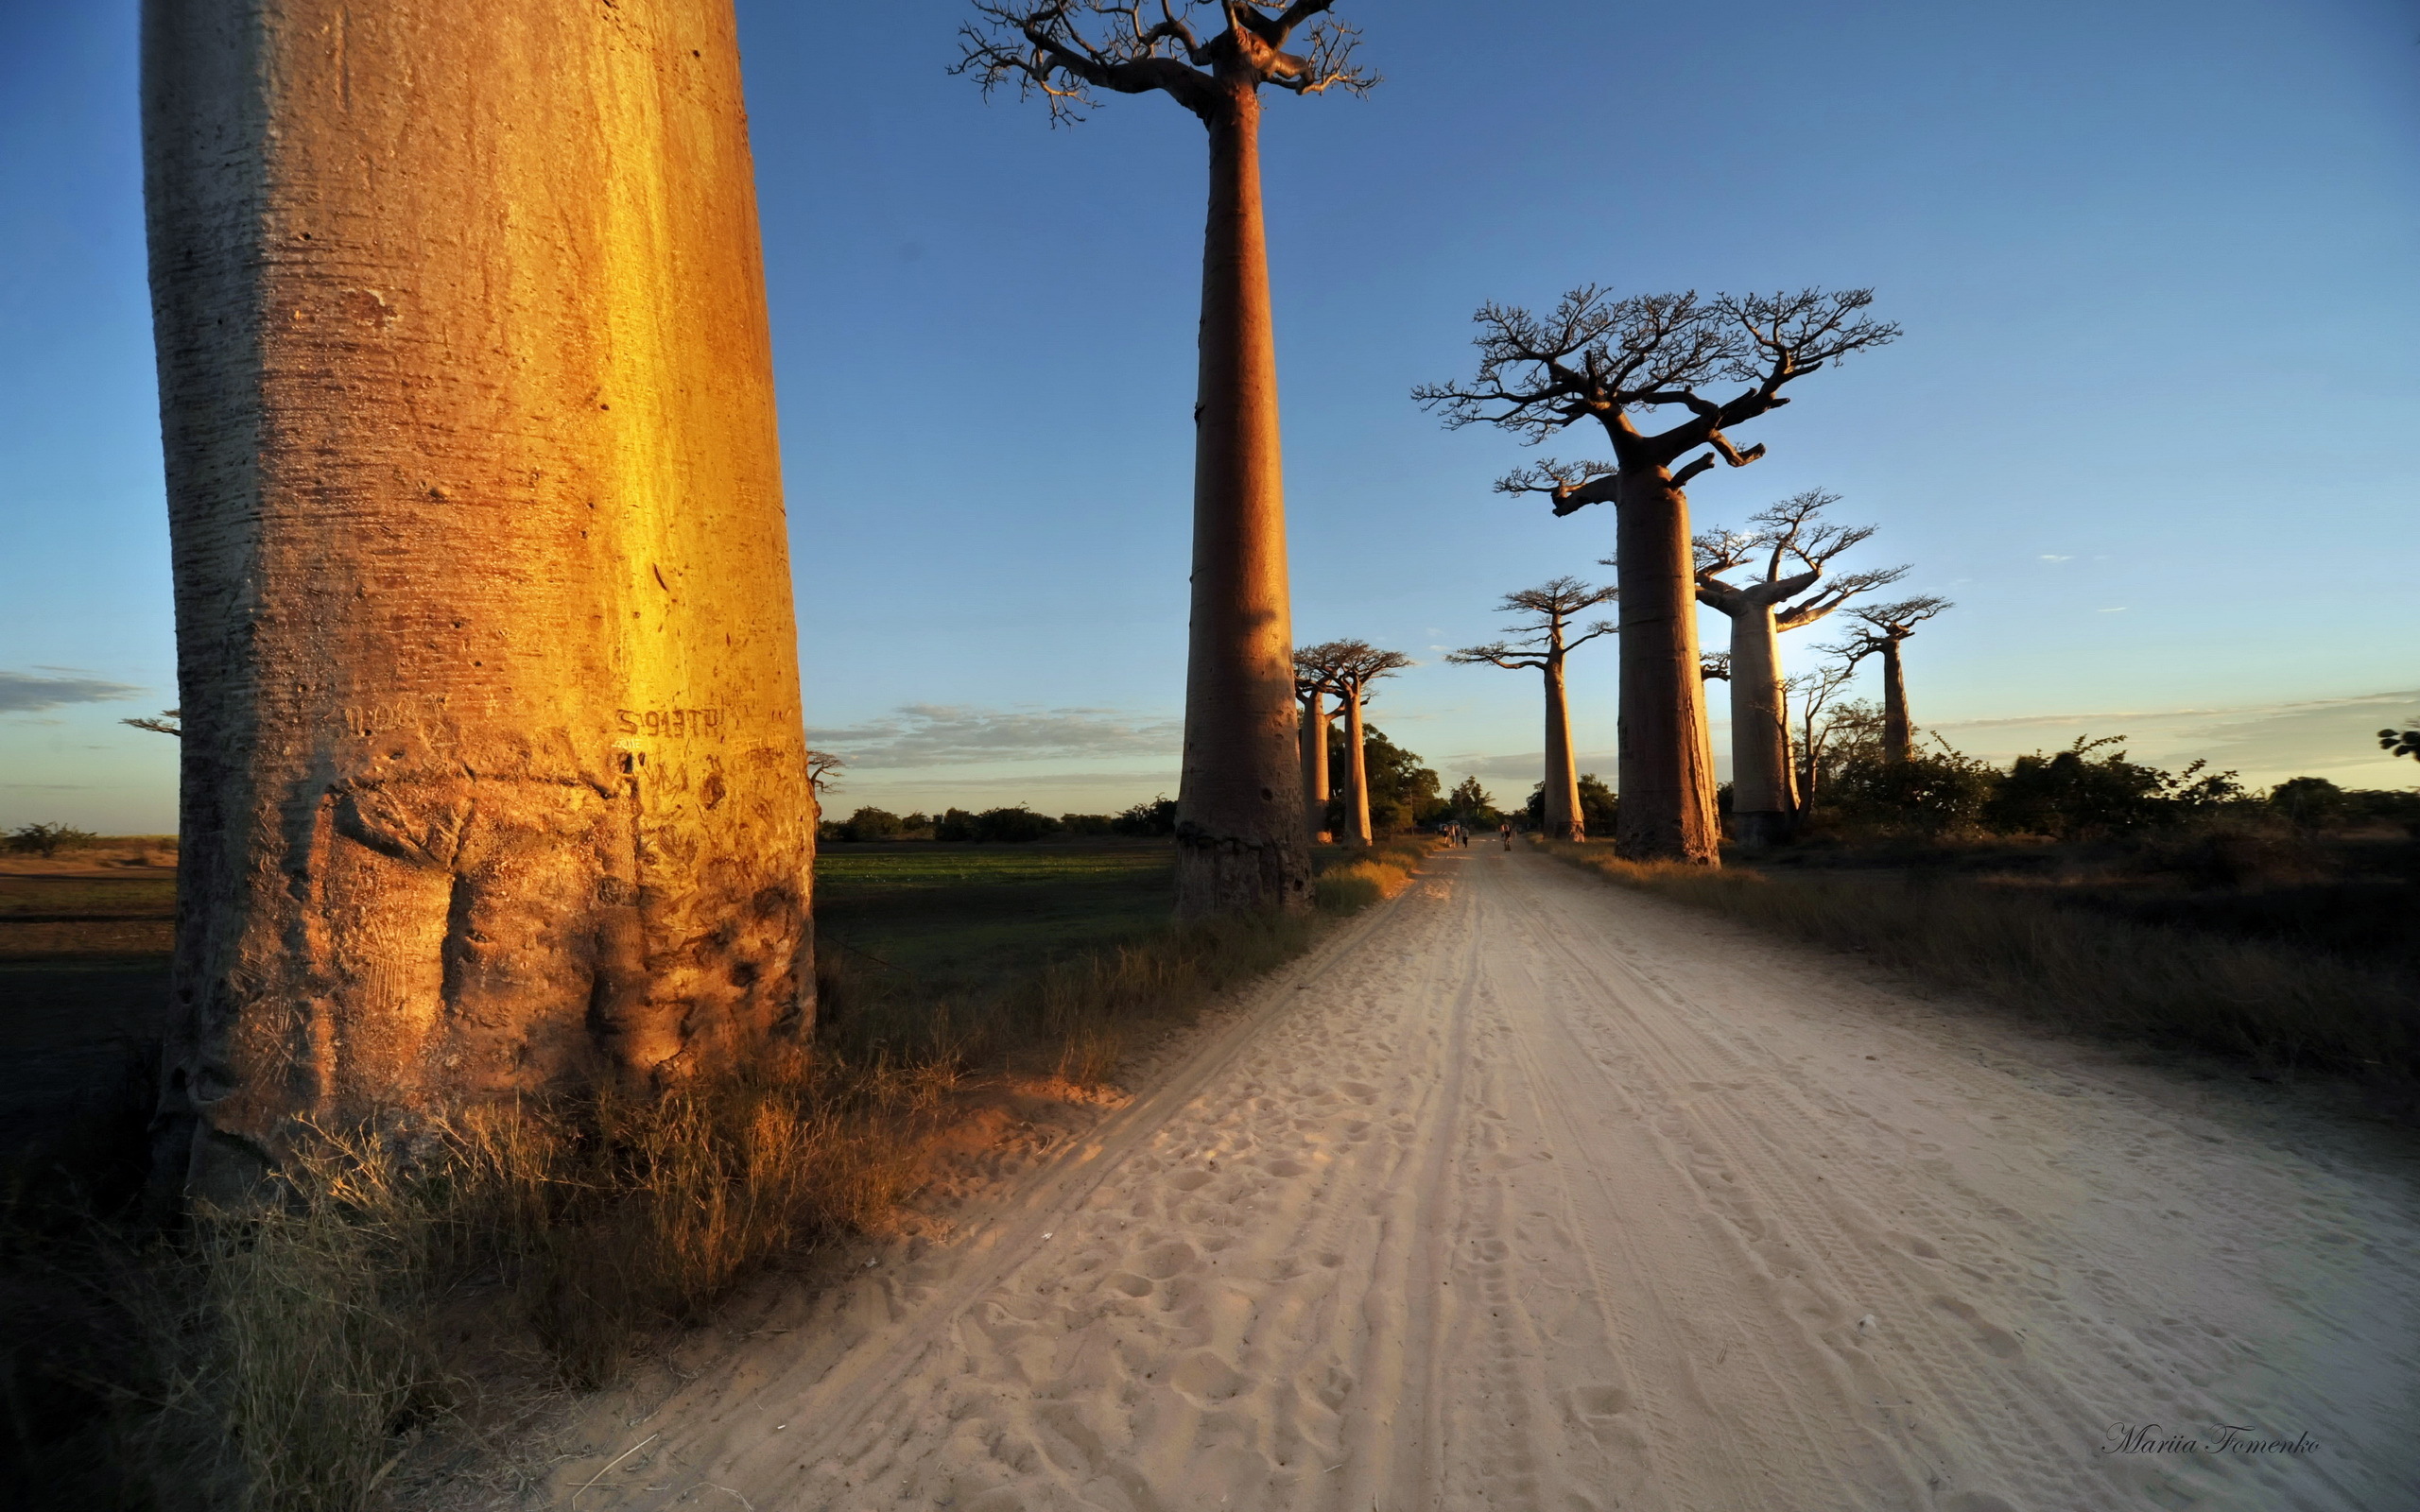 Baobab Tree Wallpapers